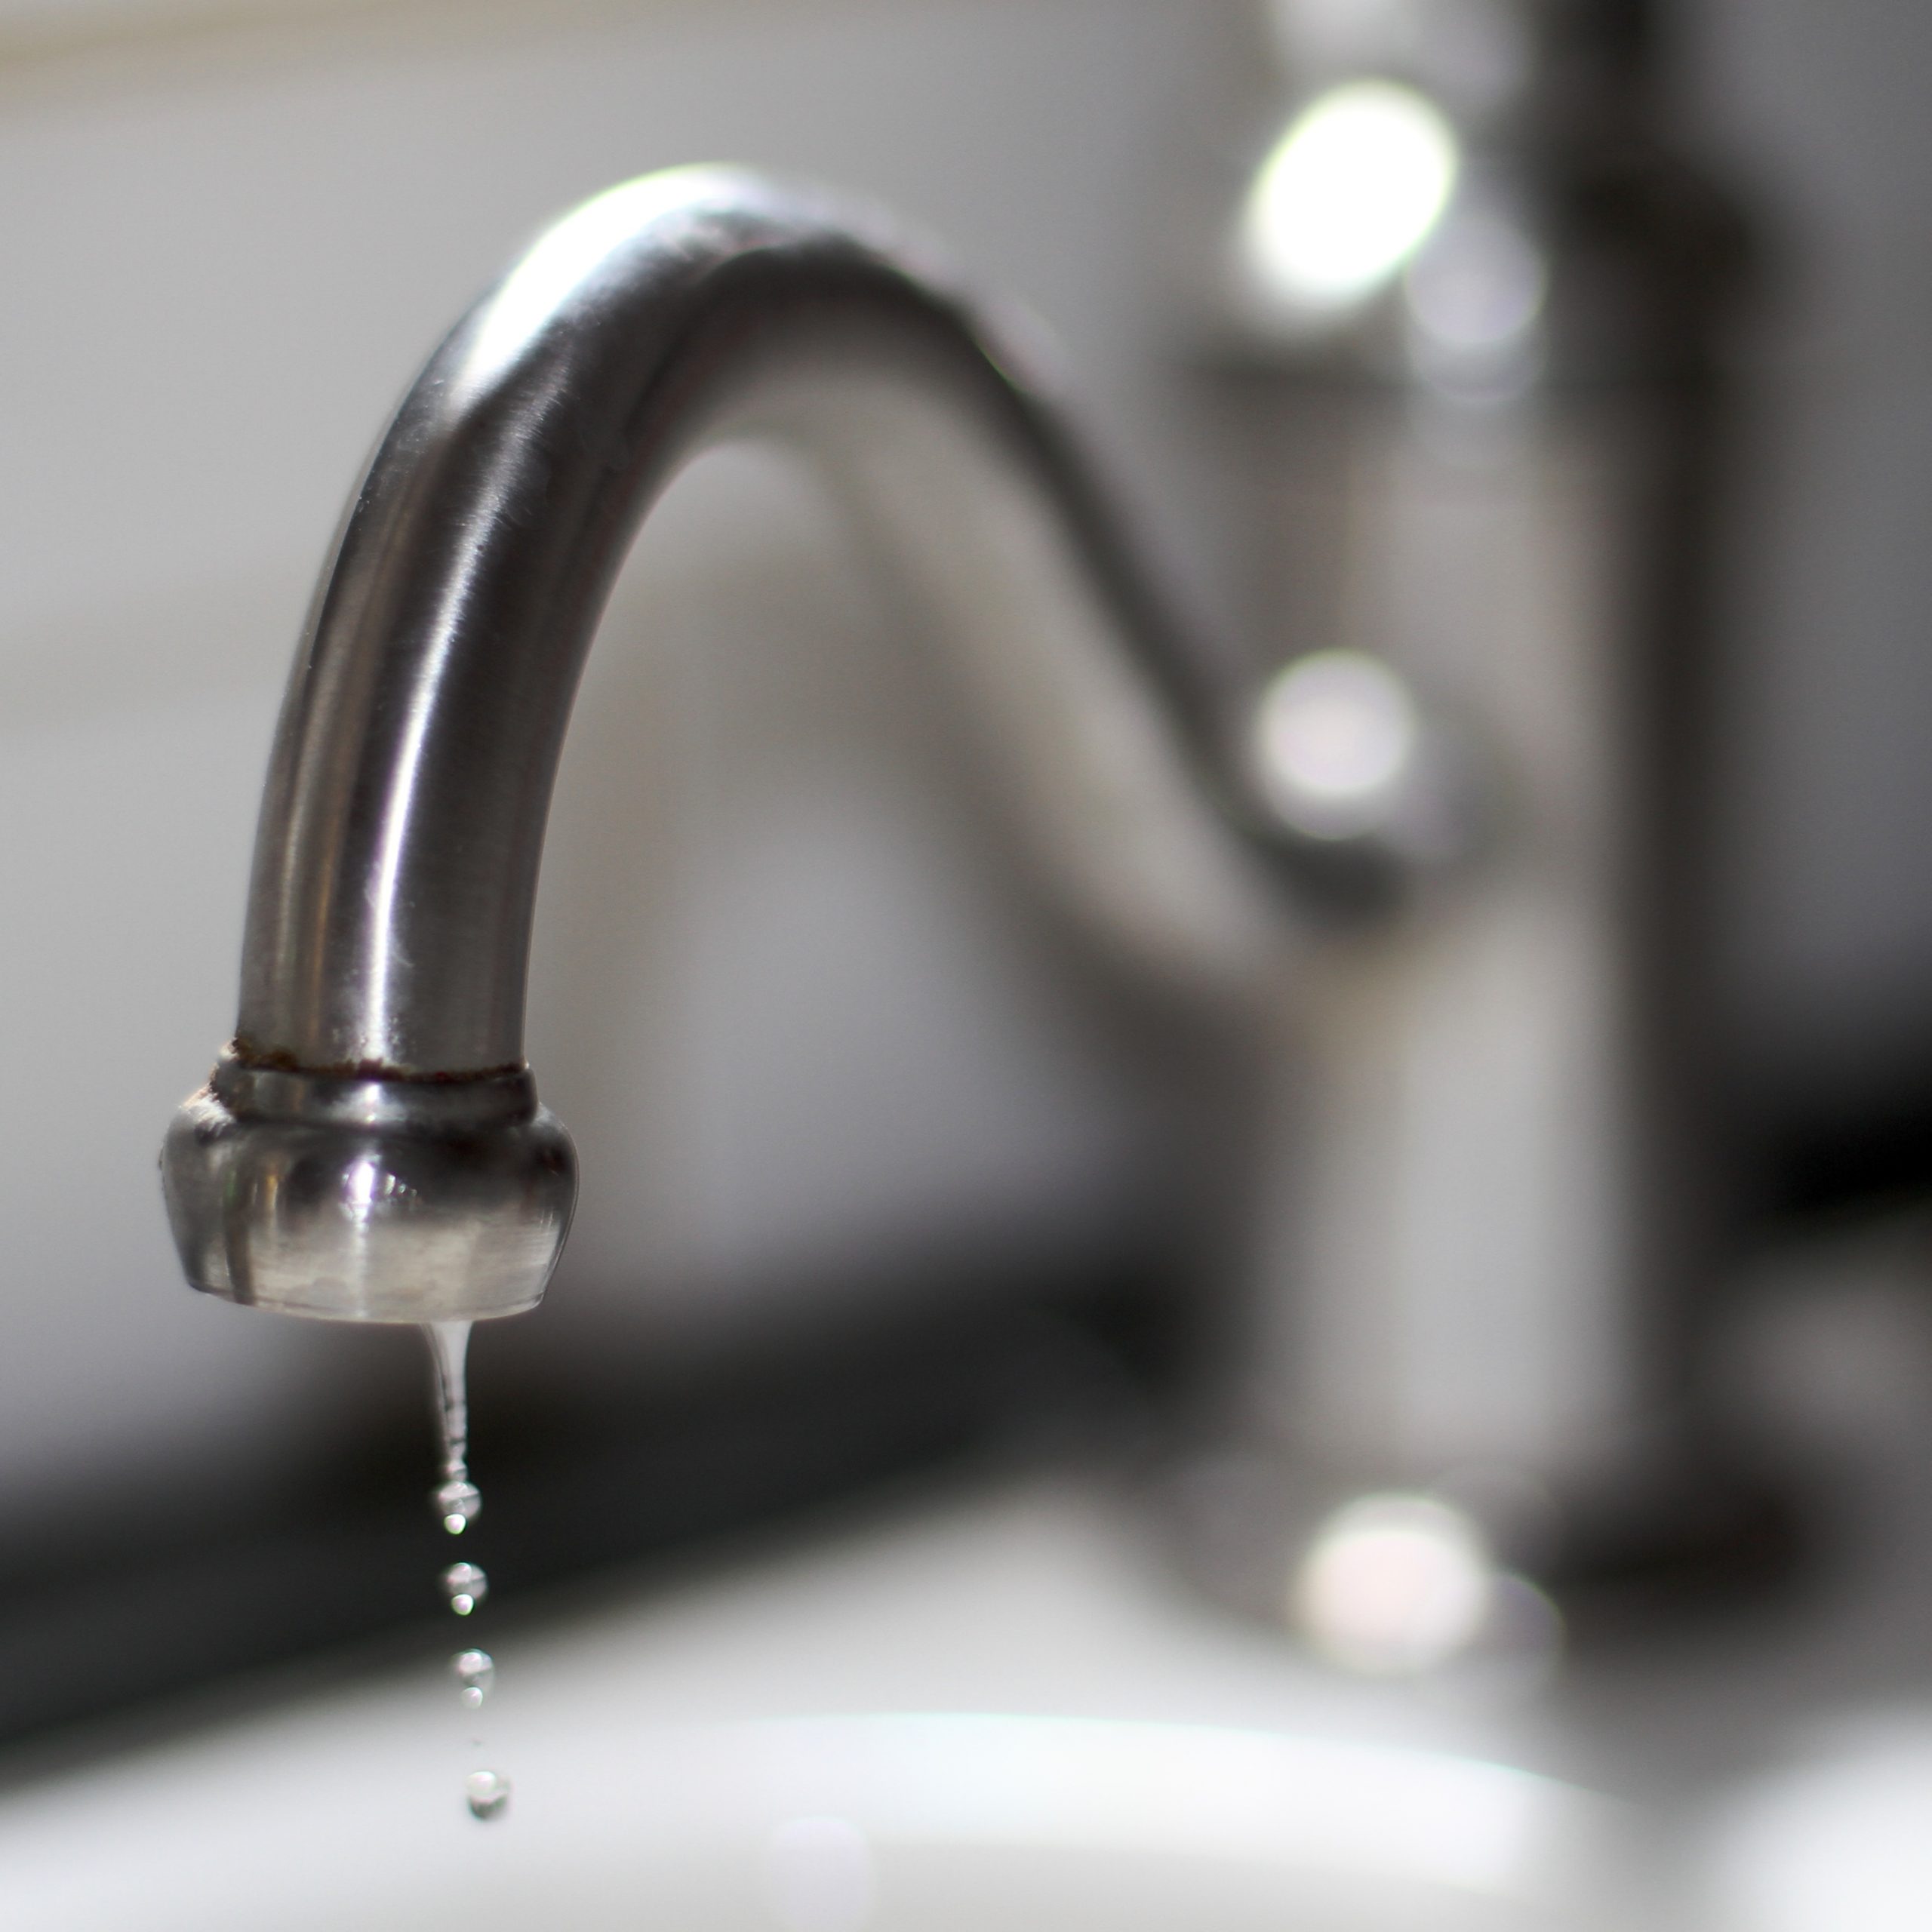 Faucet Water Pressure Problem